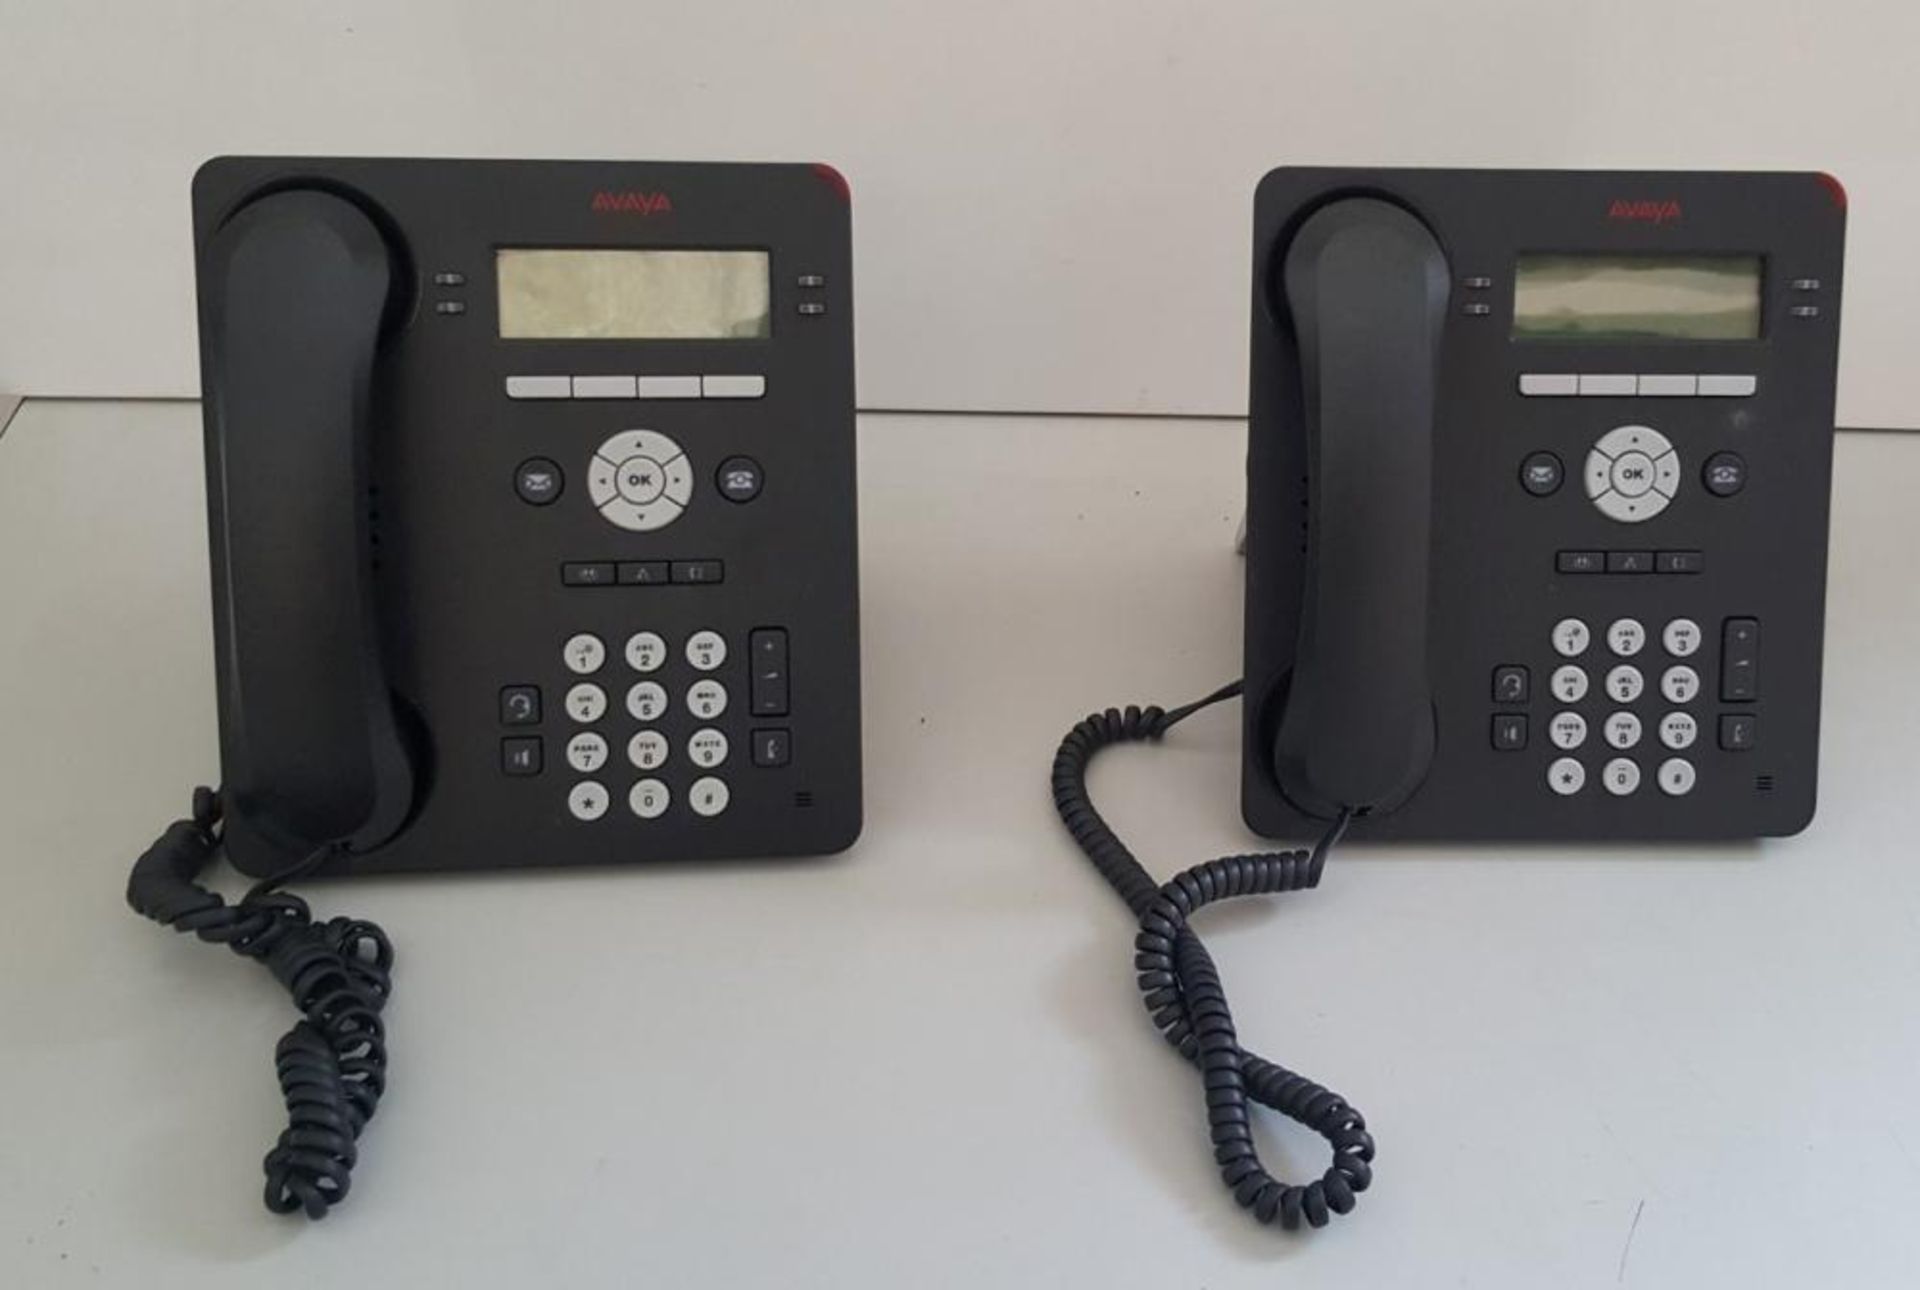 4 x Avaya 9504 Office Phones - Type 700500206 - Ref CQ236/K2 - CL379 - Location: Altrincham WA14As